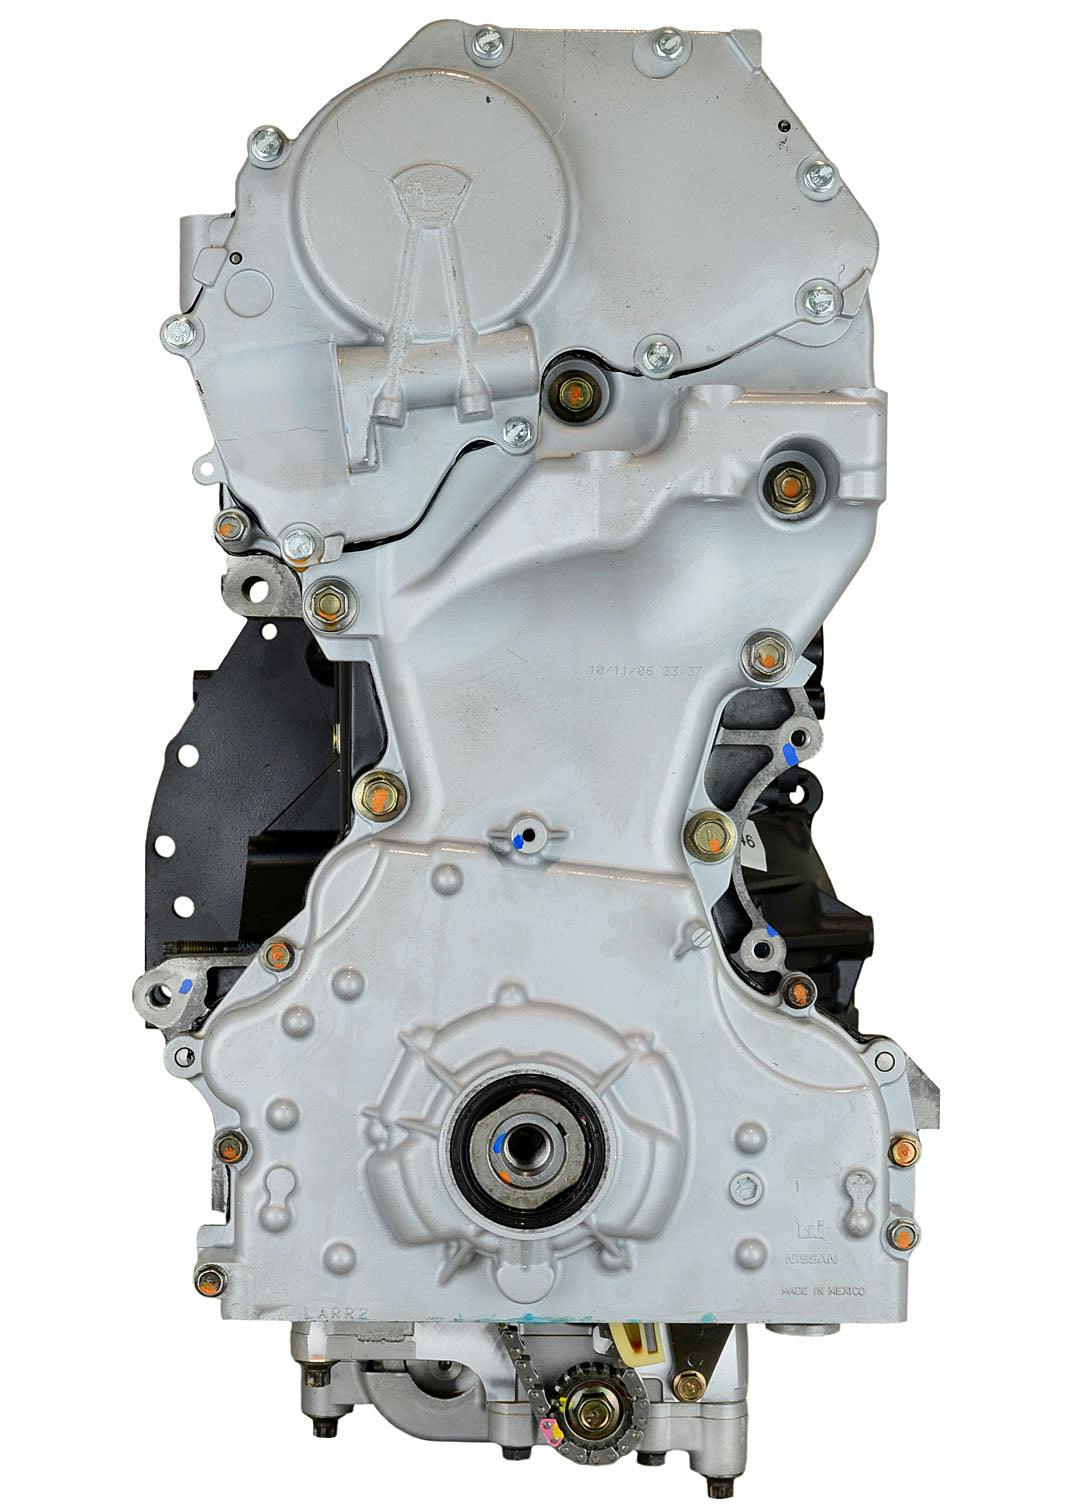 2.5L Inline-4 Engine for 2006-2013 Nissan Altima